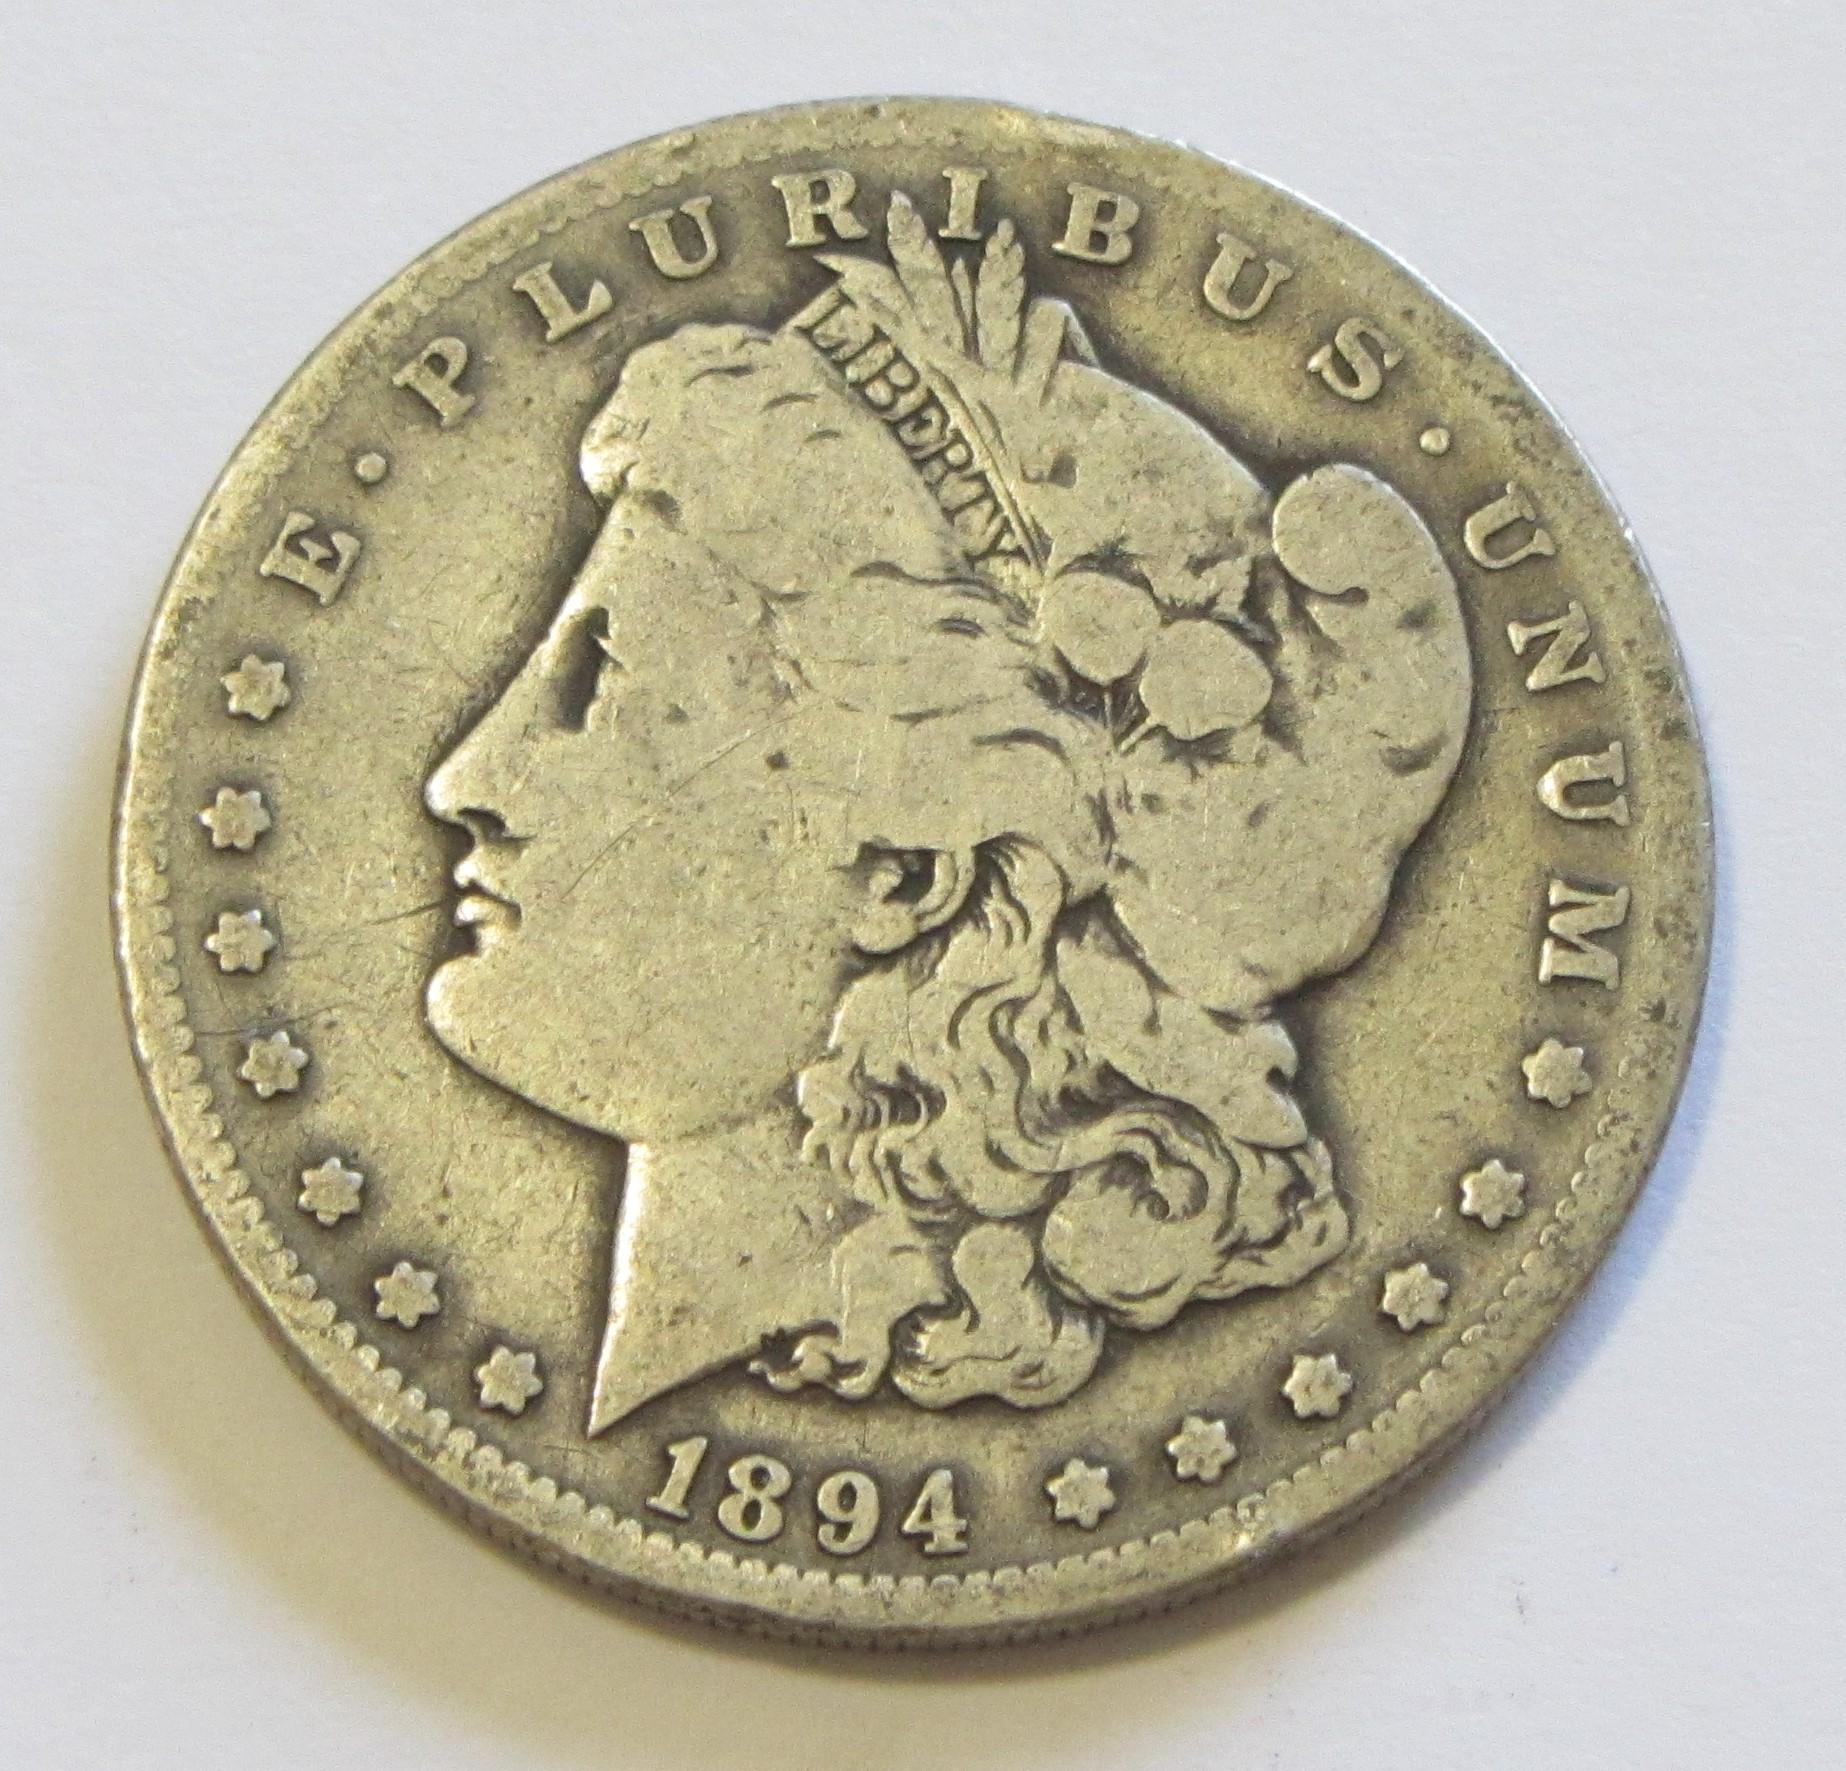 $1 1894-S MORGAN